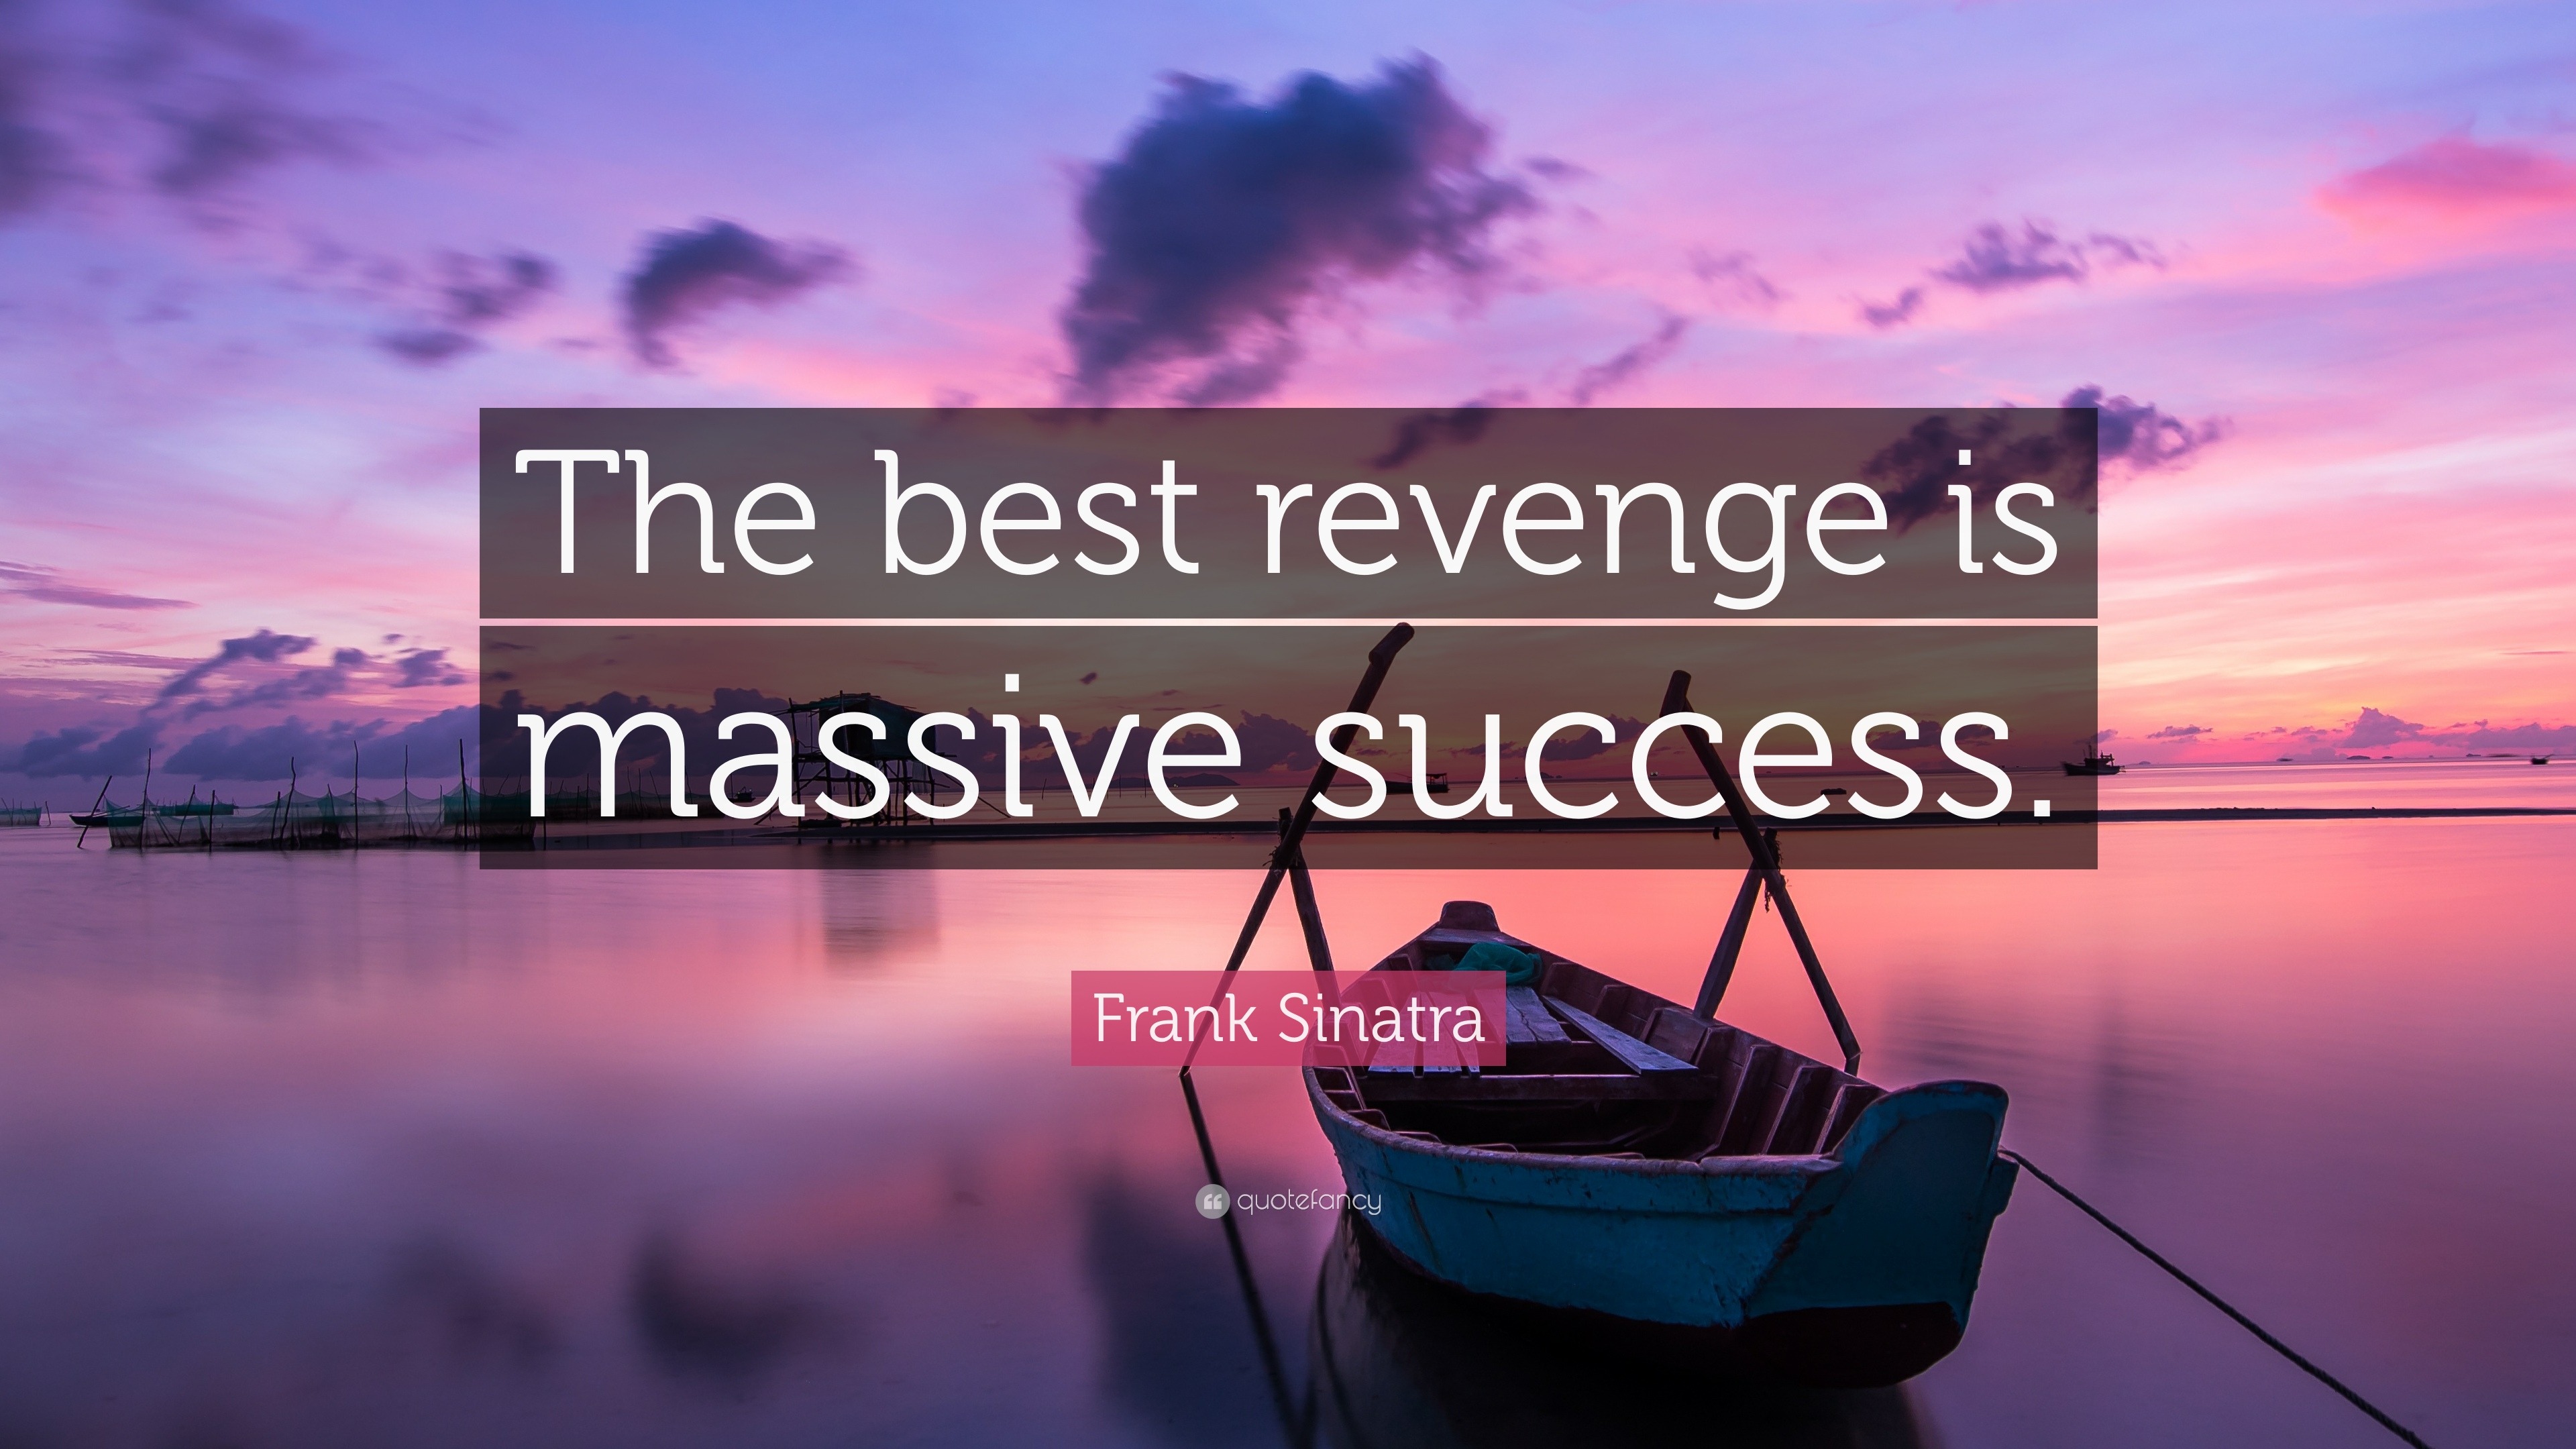 Frank Sinatra Quote “The best revenge is massive success.”